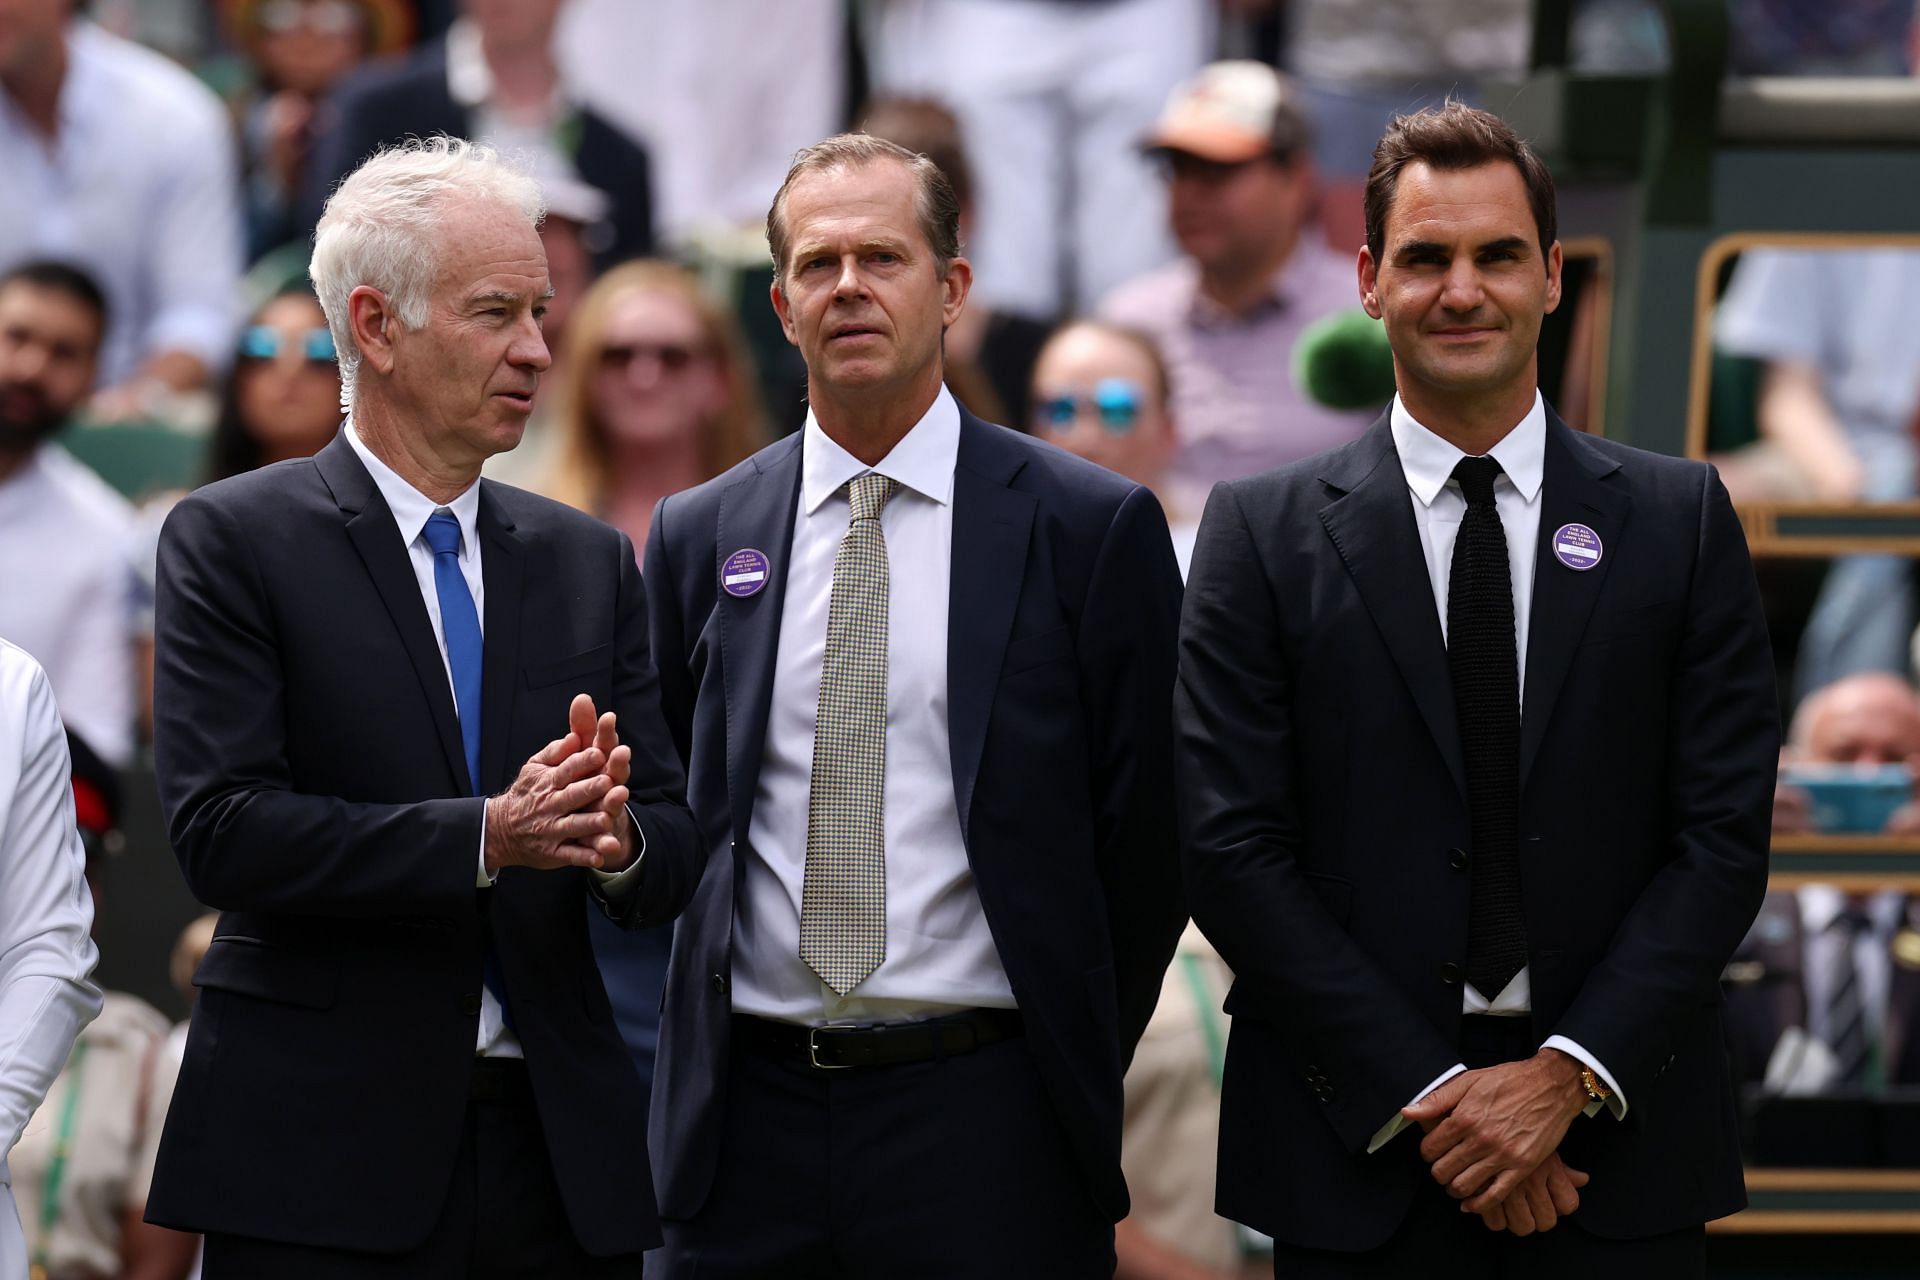 John McEnroe with Roger Federer and Stefan Edberg at Wimbledon 2022